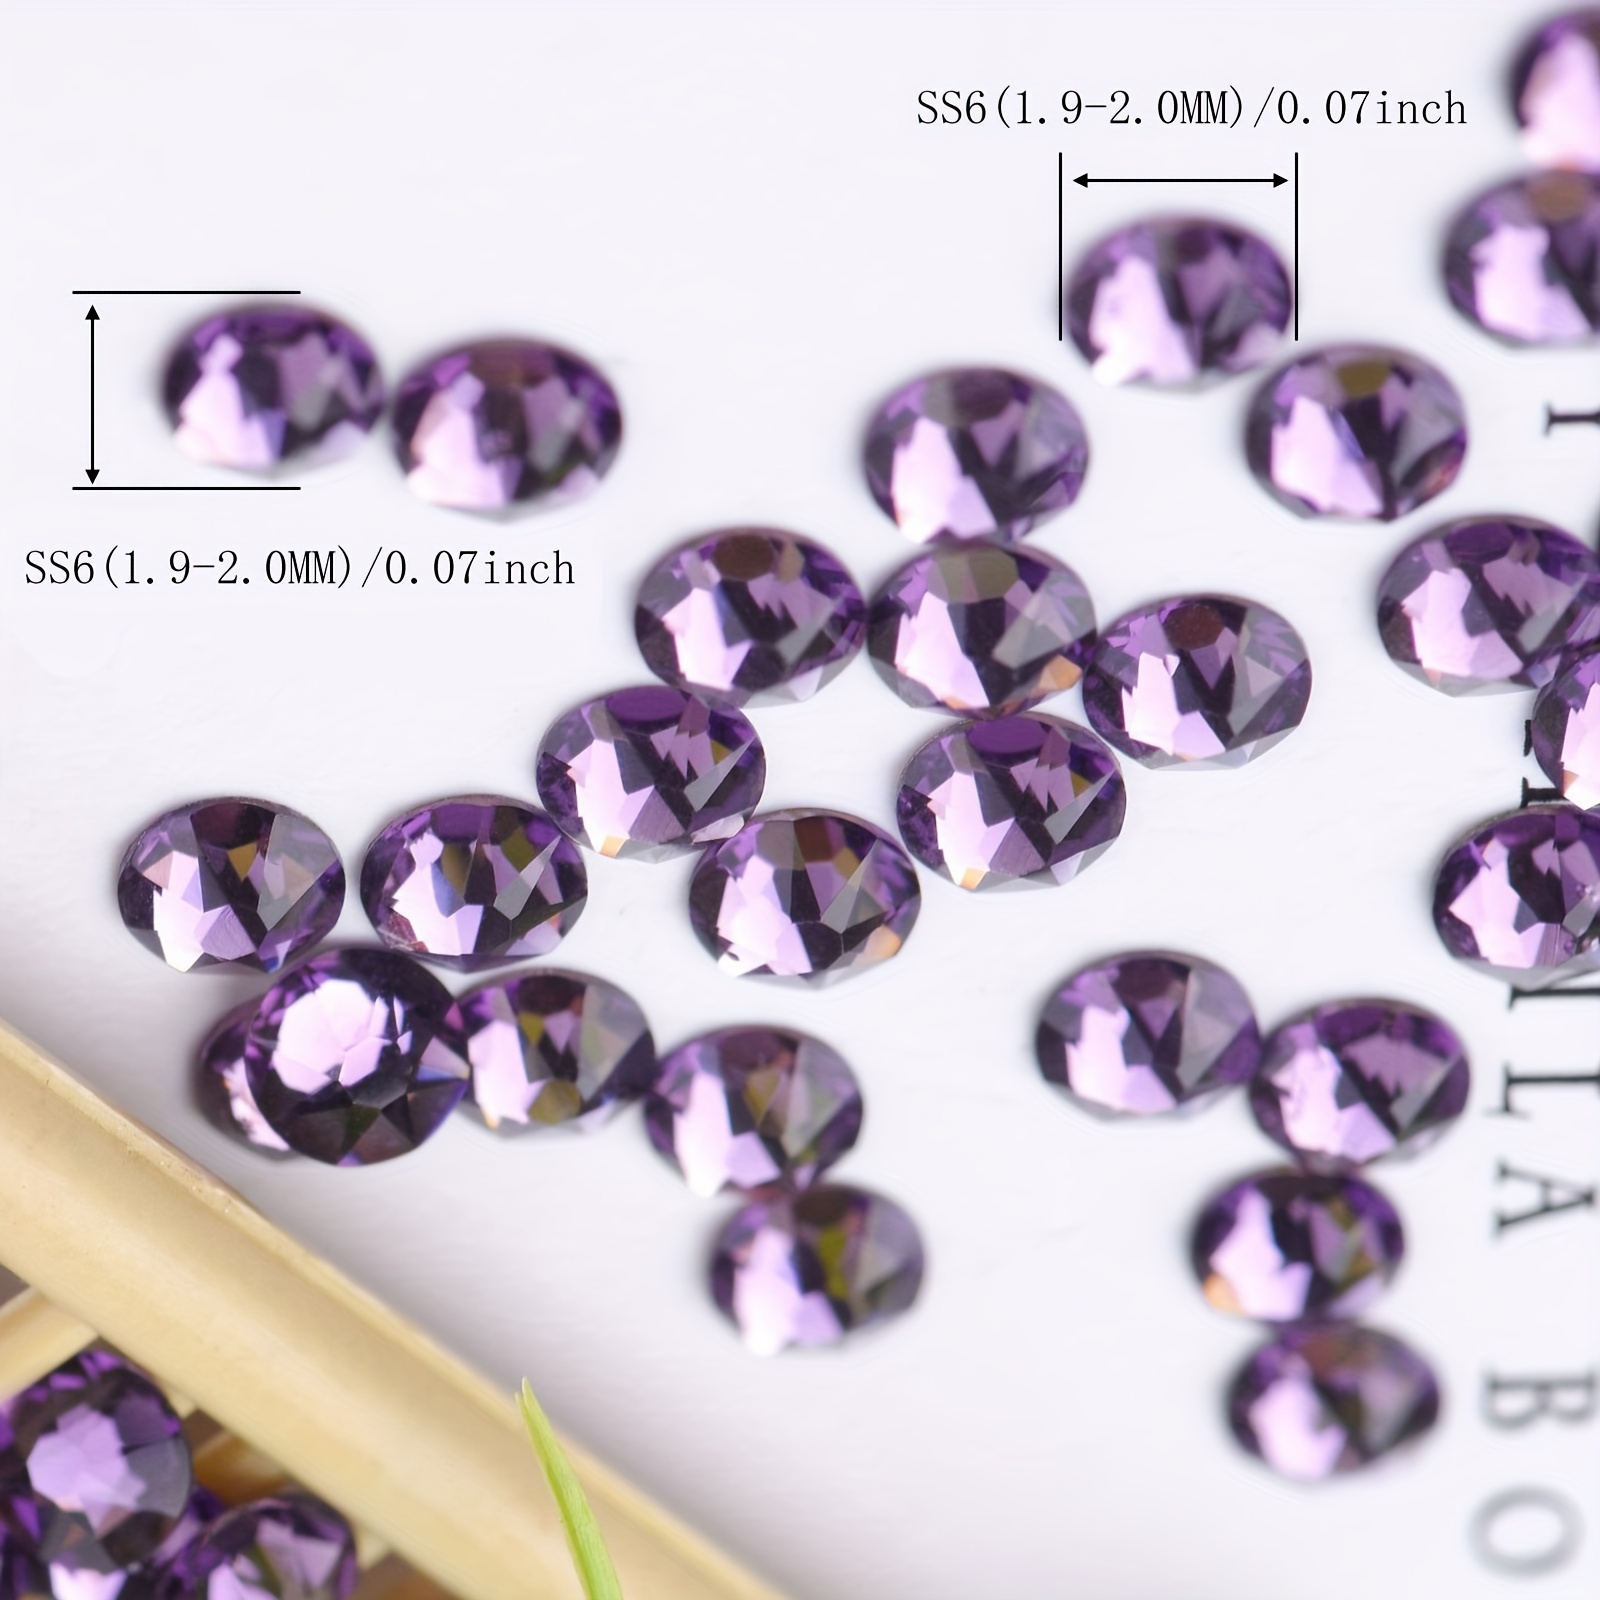 Novani Crystal Rhinestones, Flatback Loose Gemstones 1440pcs Glass  Rhinestones for Clothes Shoes Crafts Makeup Nail Art and DIY  Decorations(SS8, Lavender) 